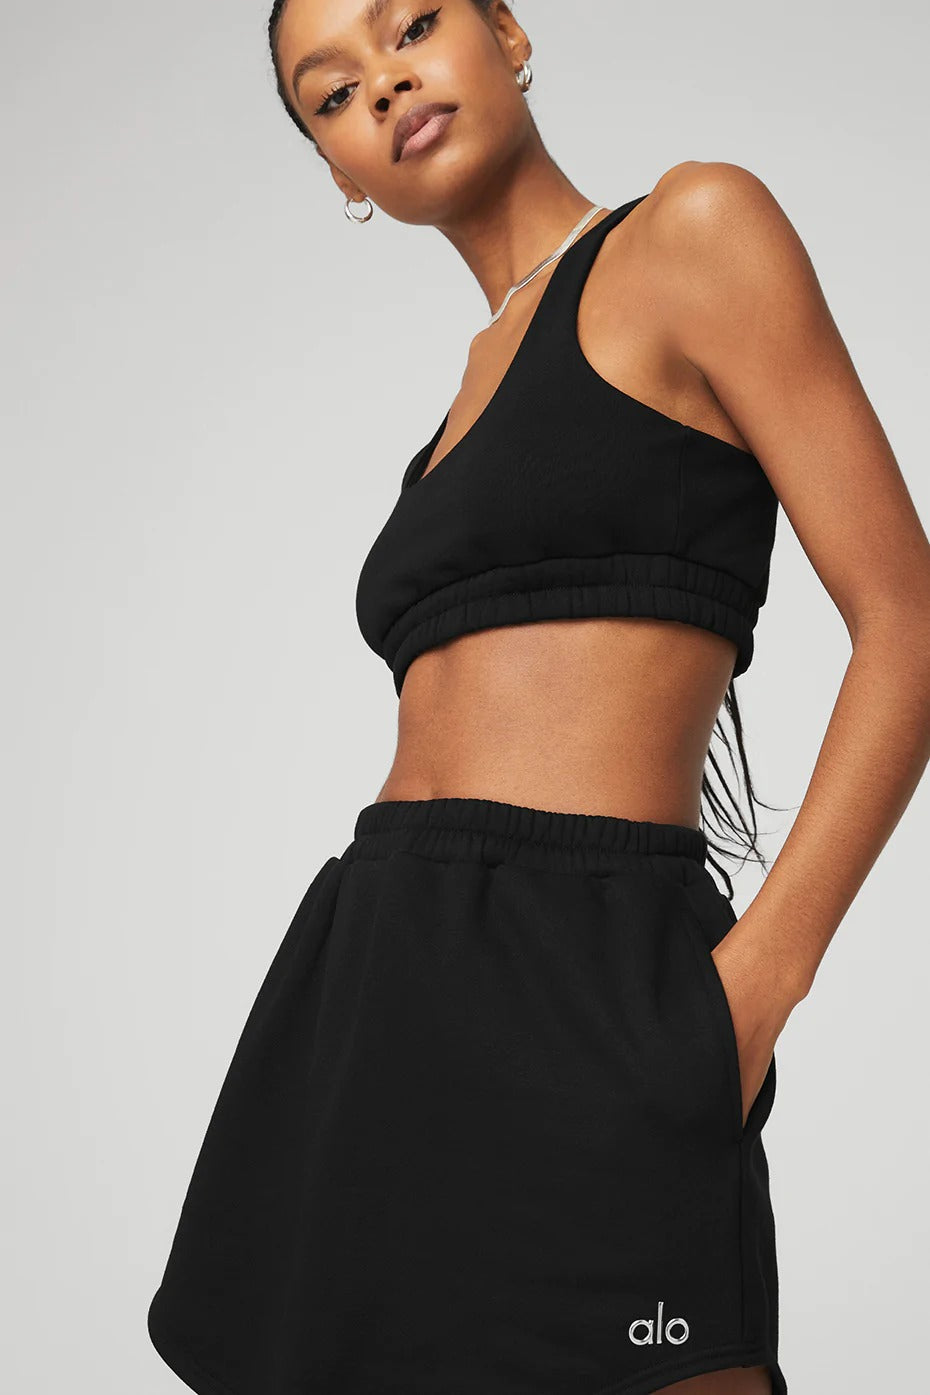 Alo Yoga Scoop Neck Sweatshirt Bra Size M - $25 (56% Off Retail) - From  alexa